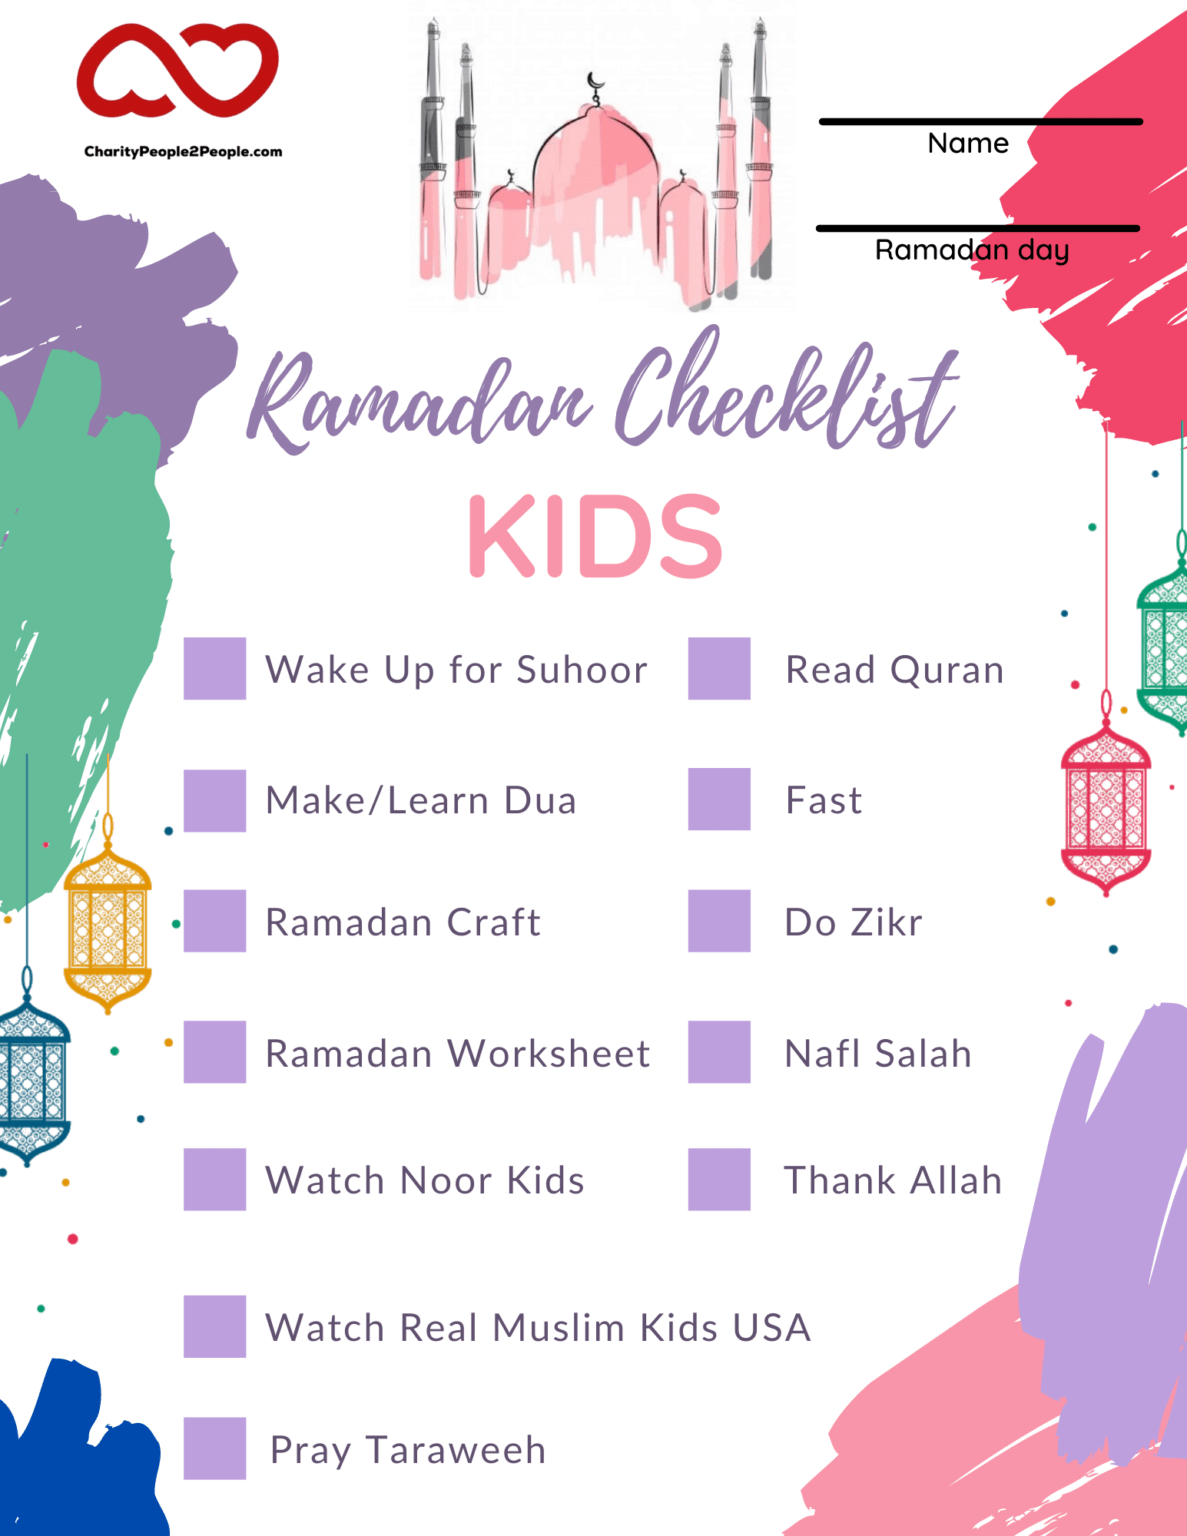 Ramadan Checklist for Kids Islamic Charity People 2 People (786) 6776722